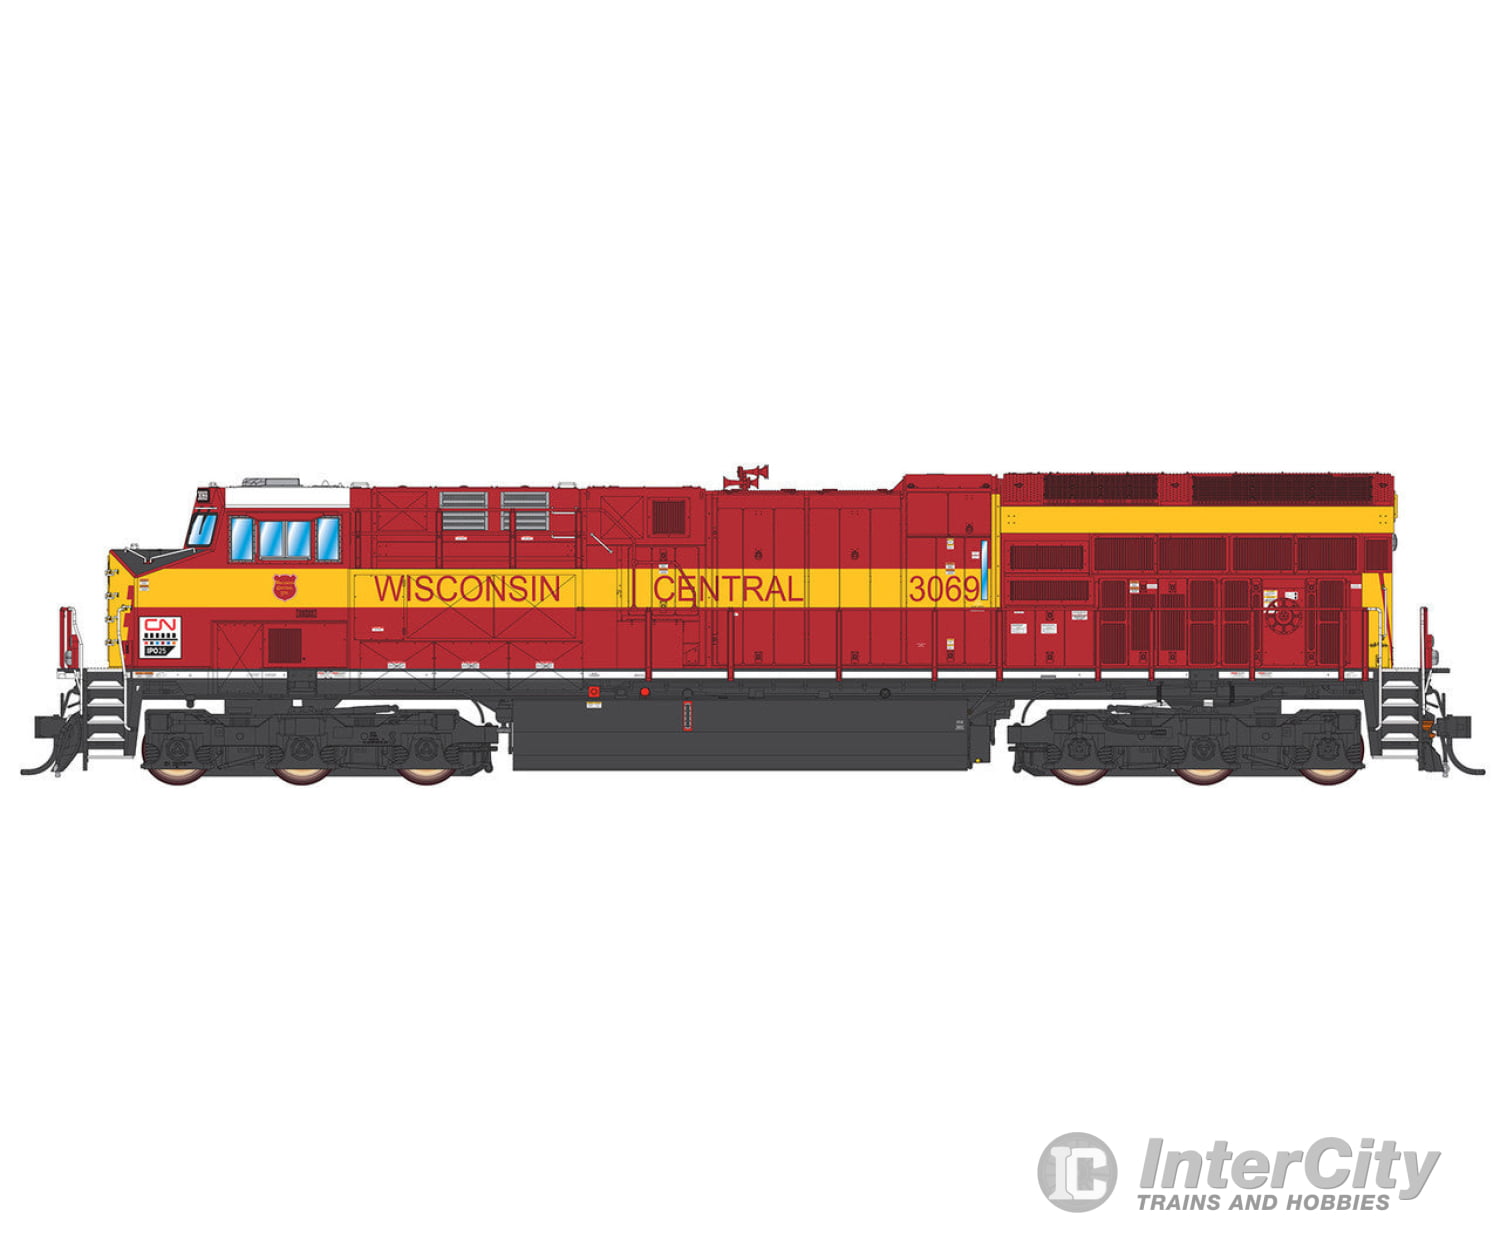 Intermountain 497113S-01 Ho Tier 4 Locomotive W/Sound - Cn Heritage Wc Dcc & Sound #3069 Locomotives